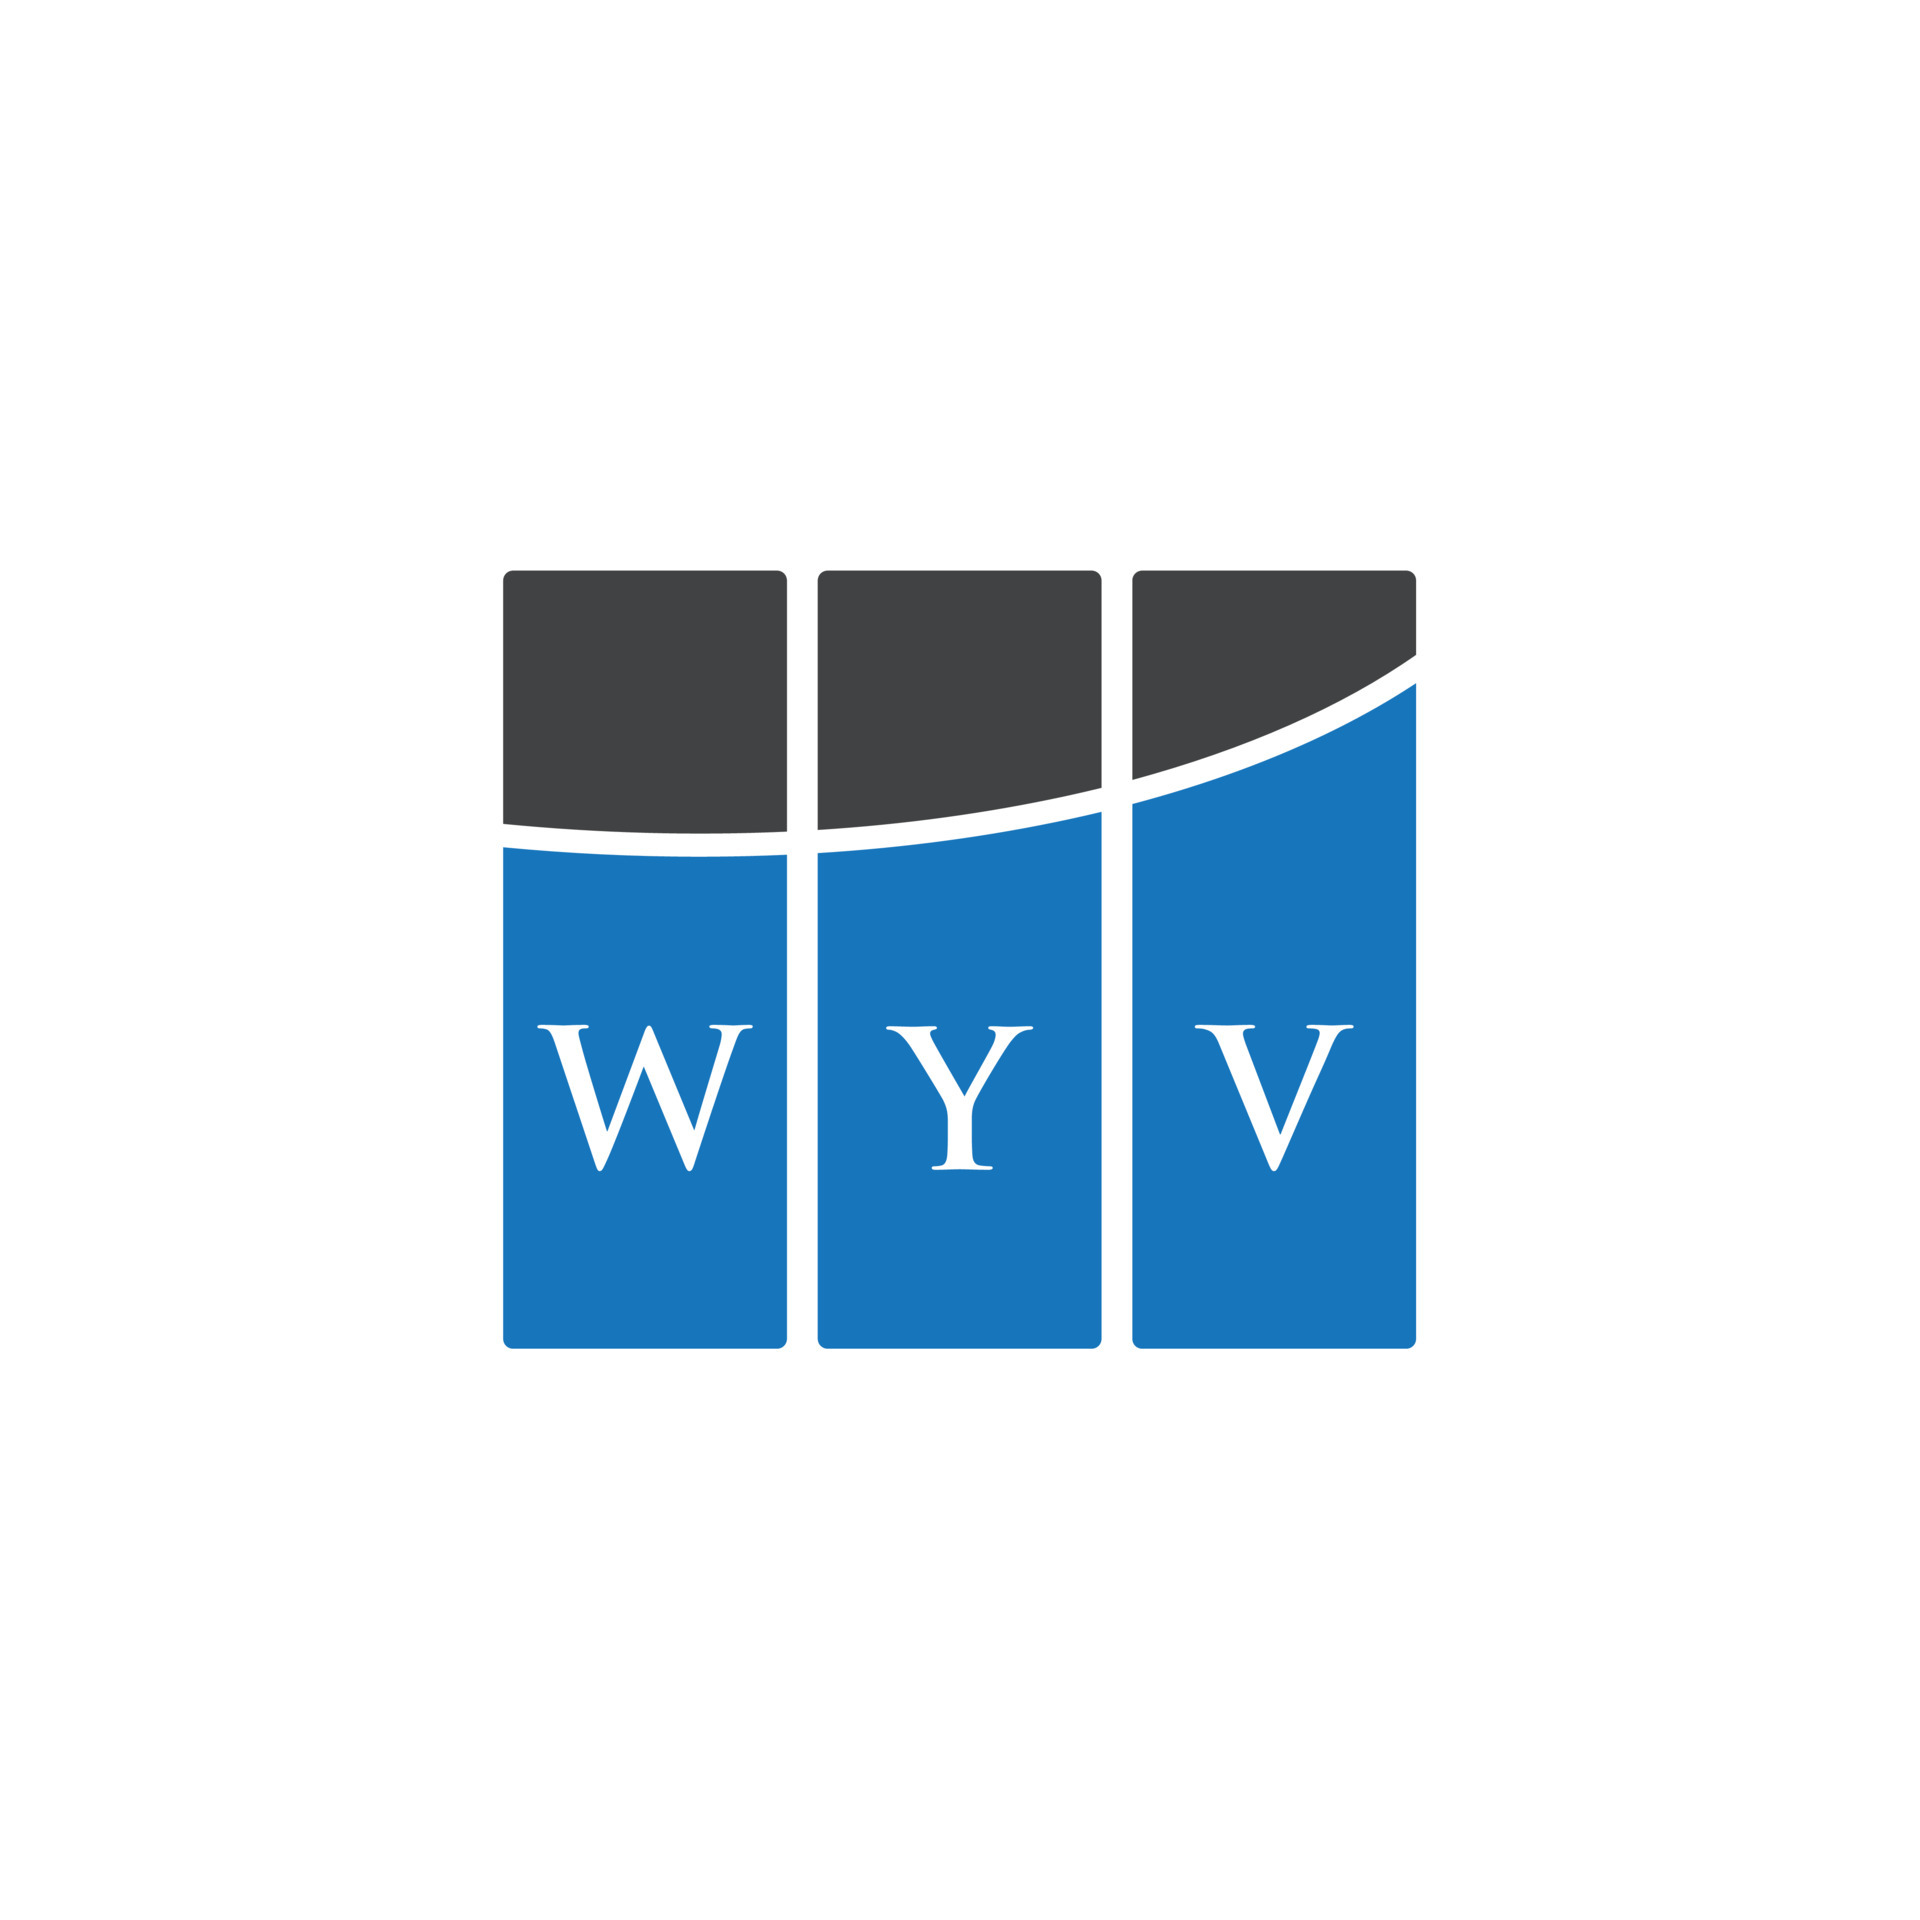 Wyv Letter Logo Design On White Background Wyv Creative Initials Letter Logo Concept Wyv Letter Design Vector Art At Vecteezy